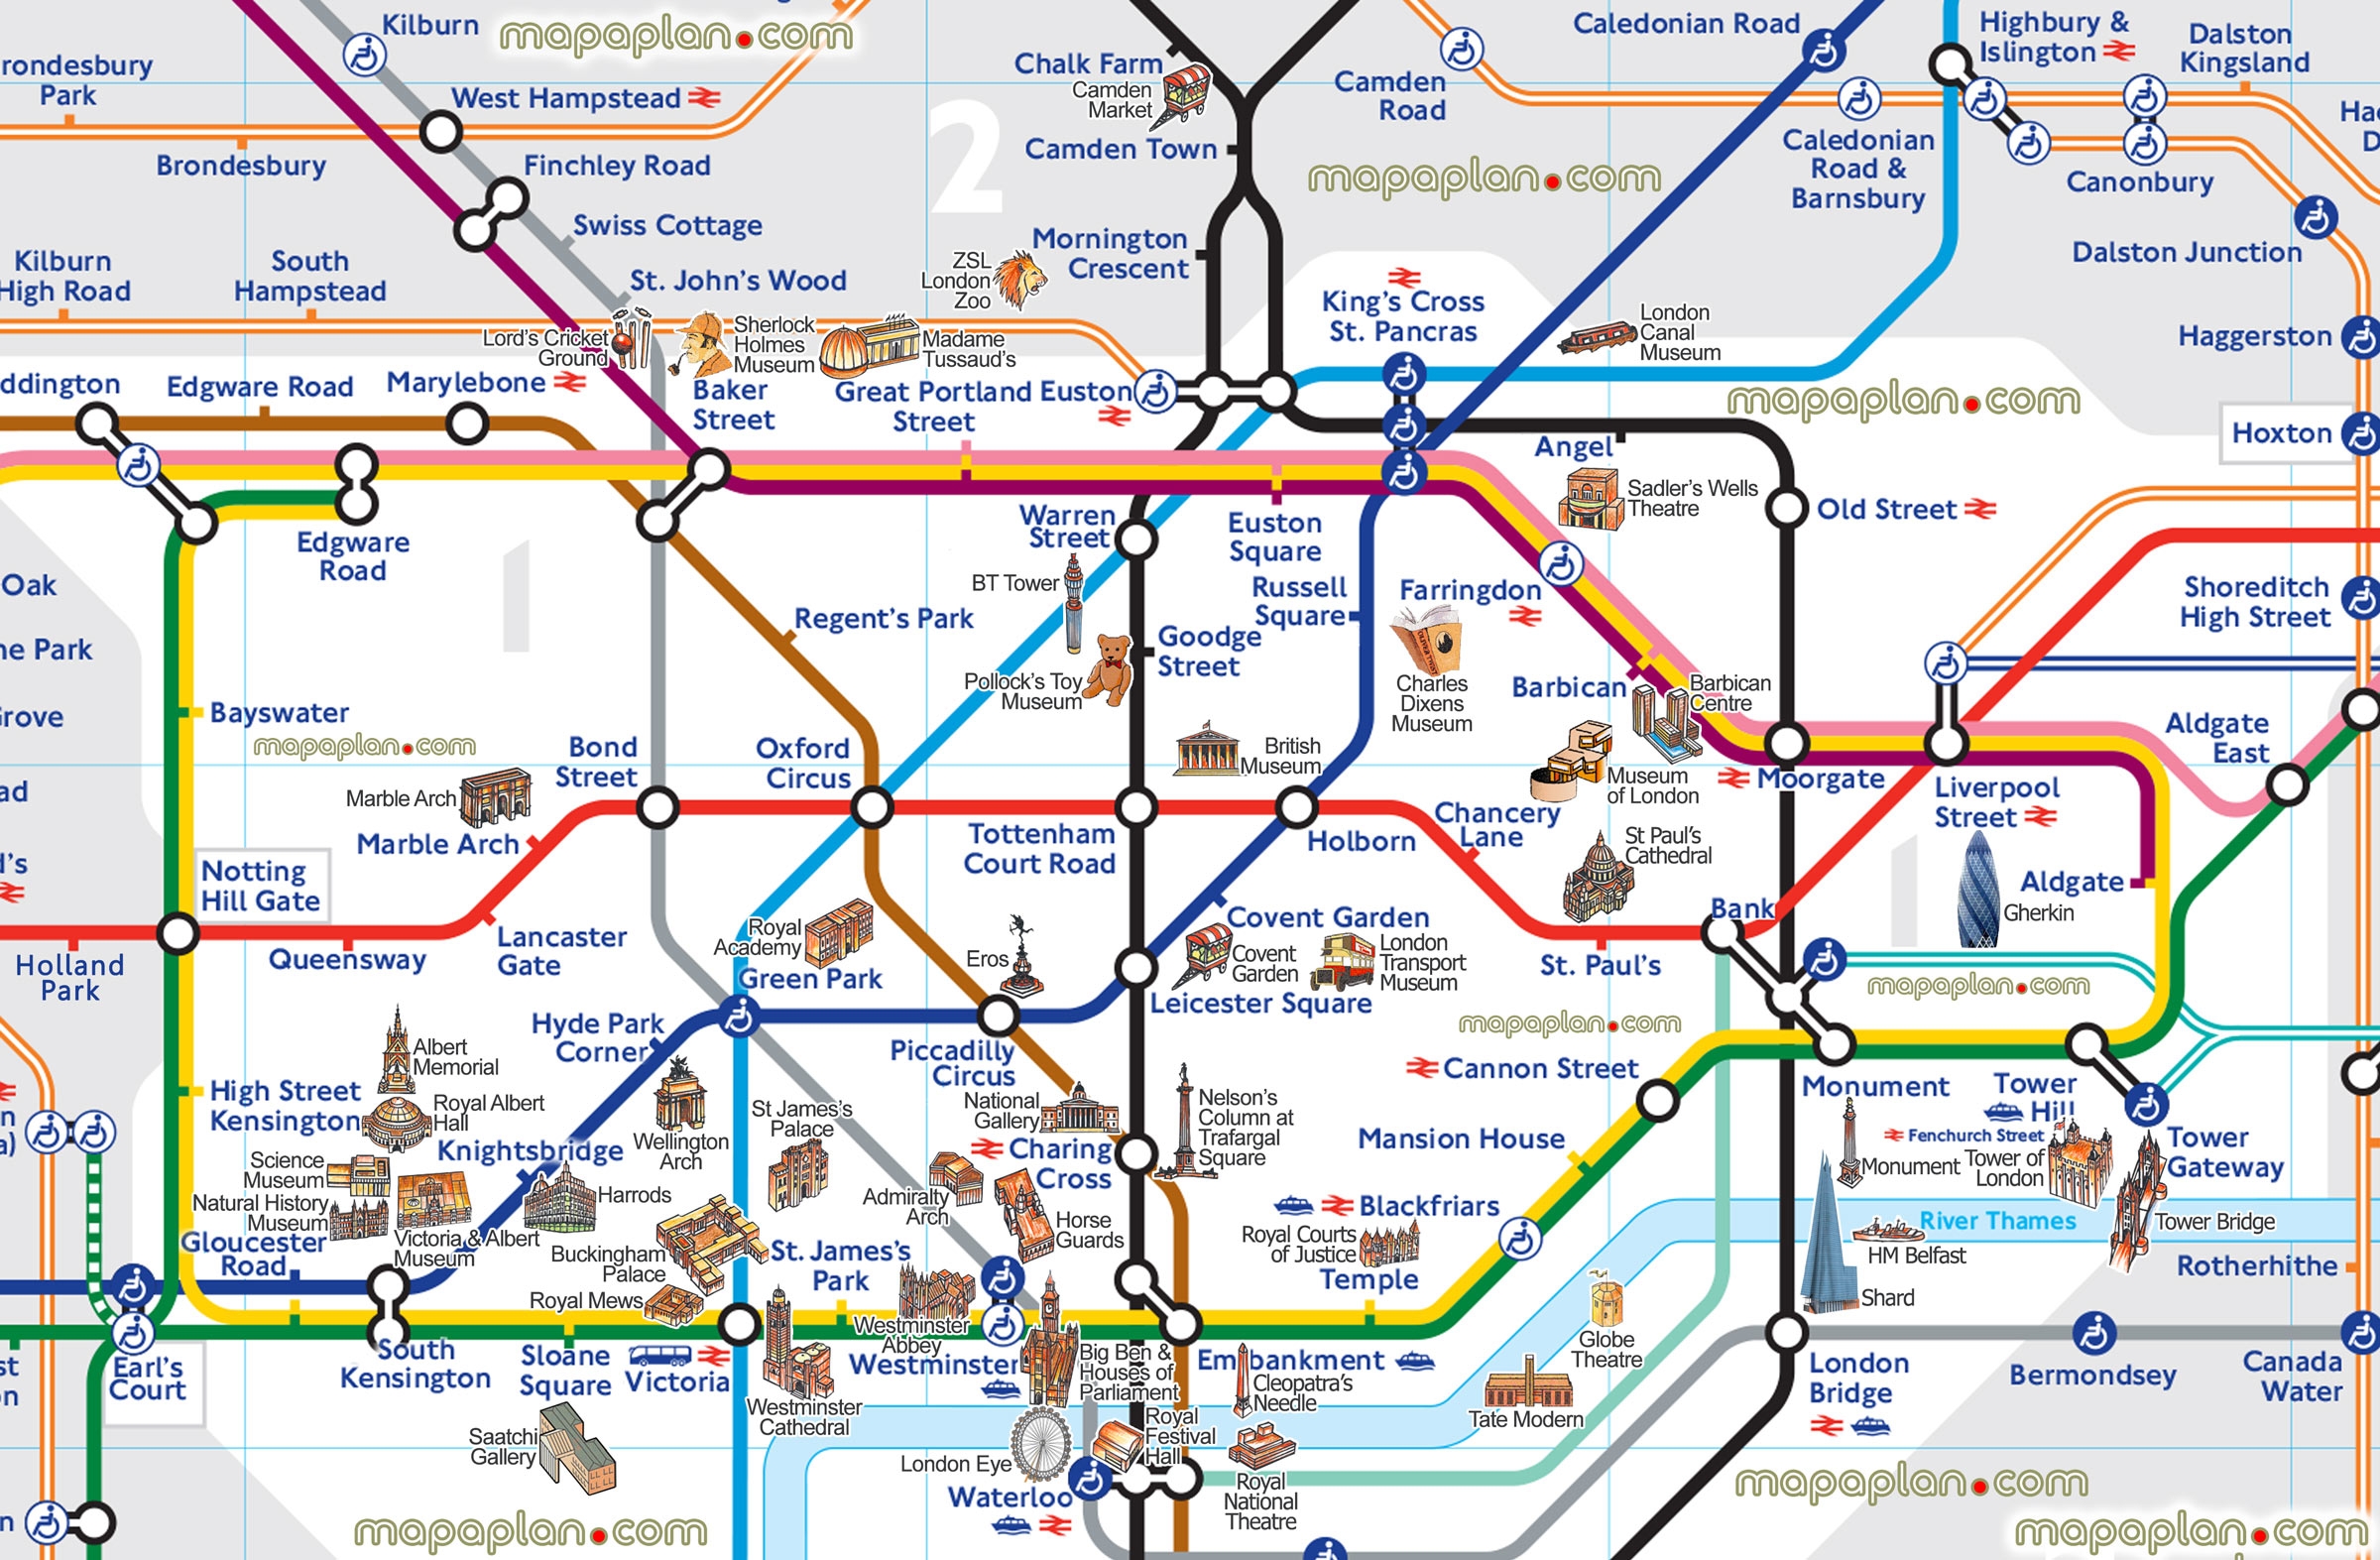 london-statio-subterranea-map